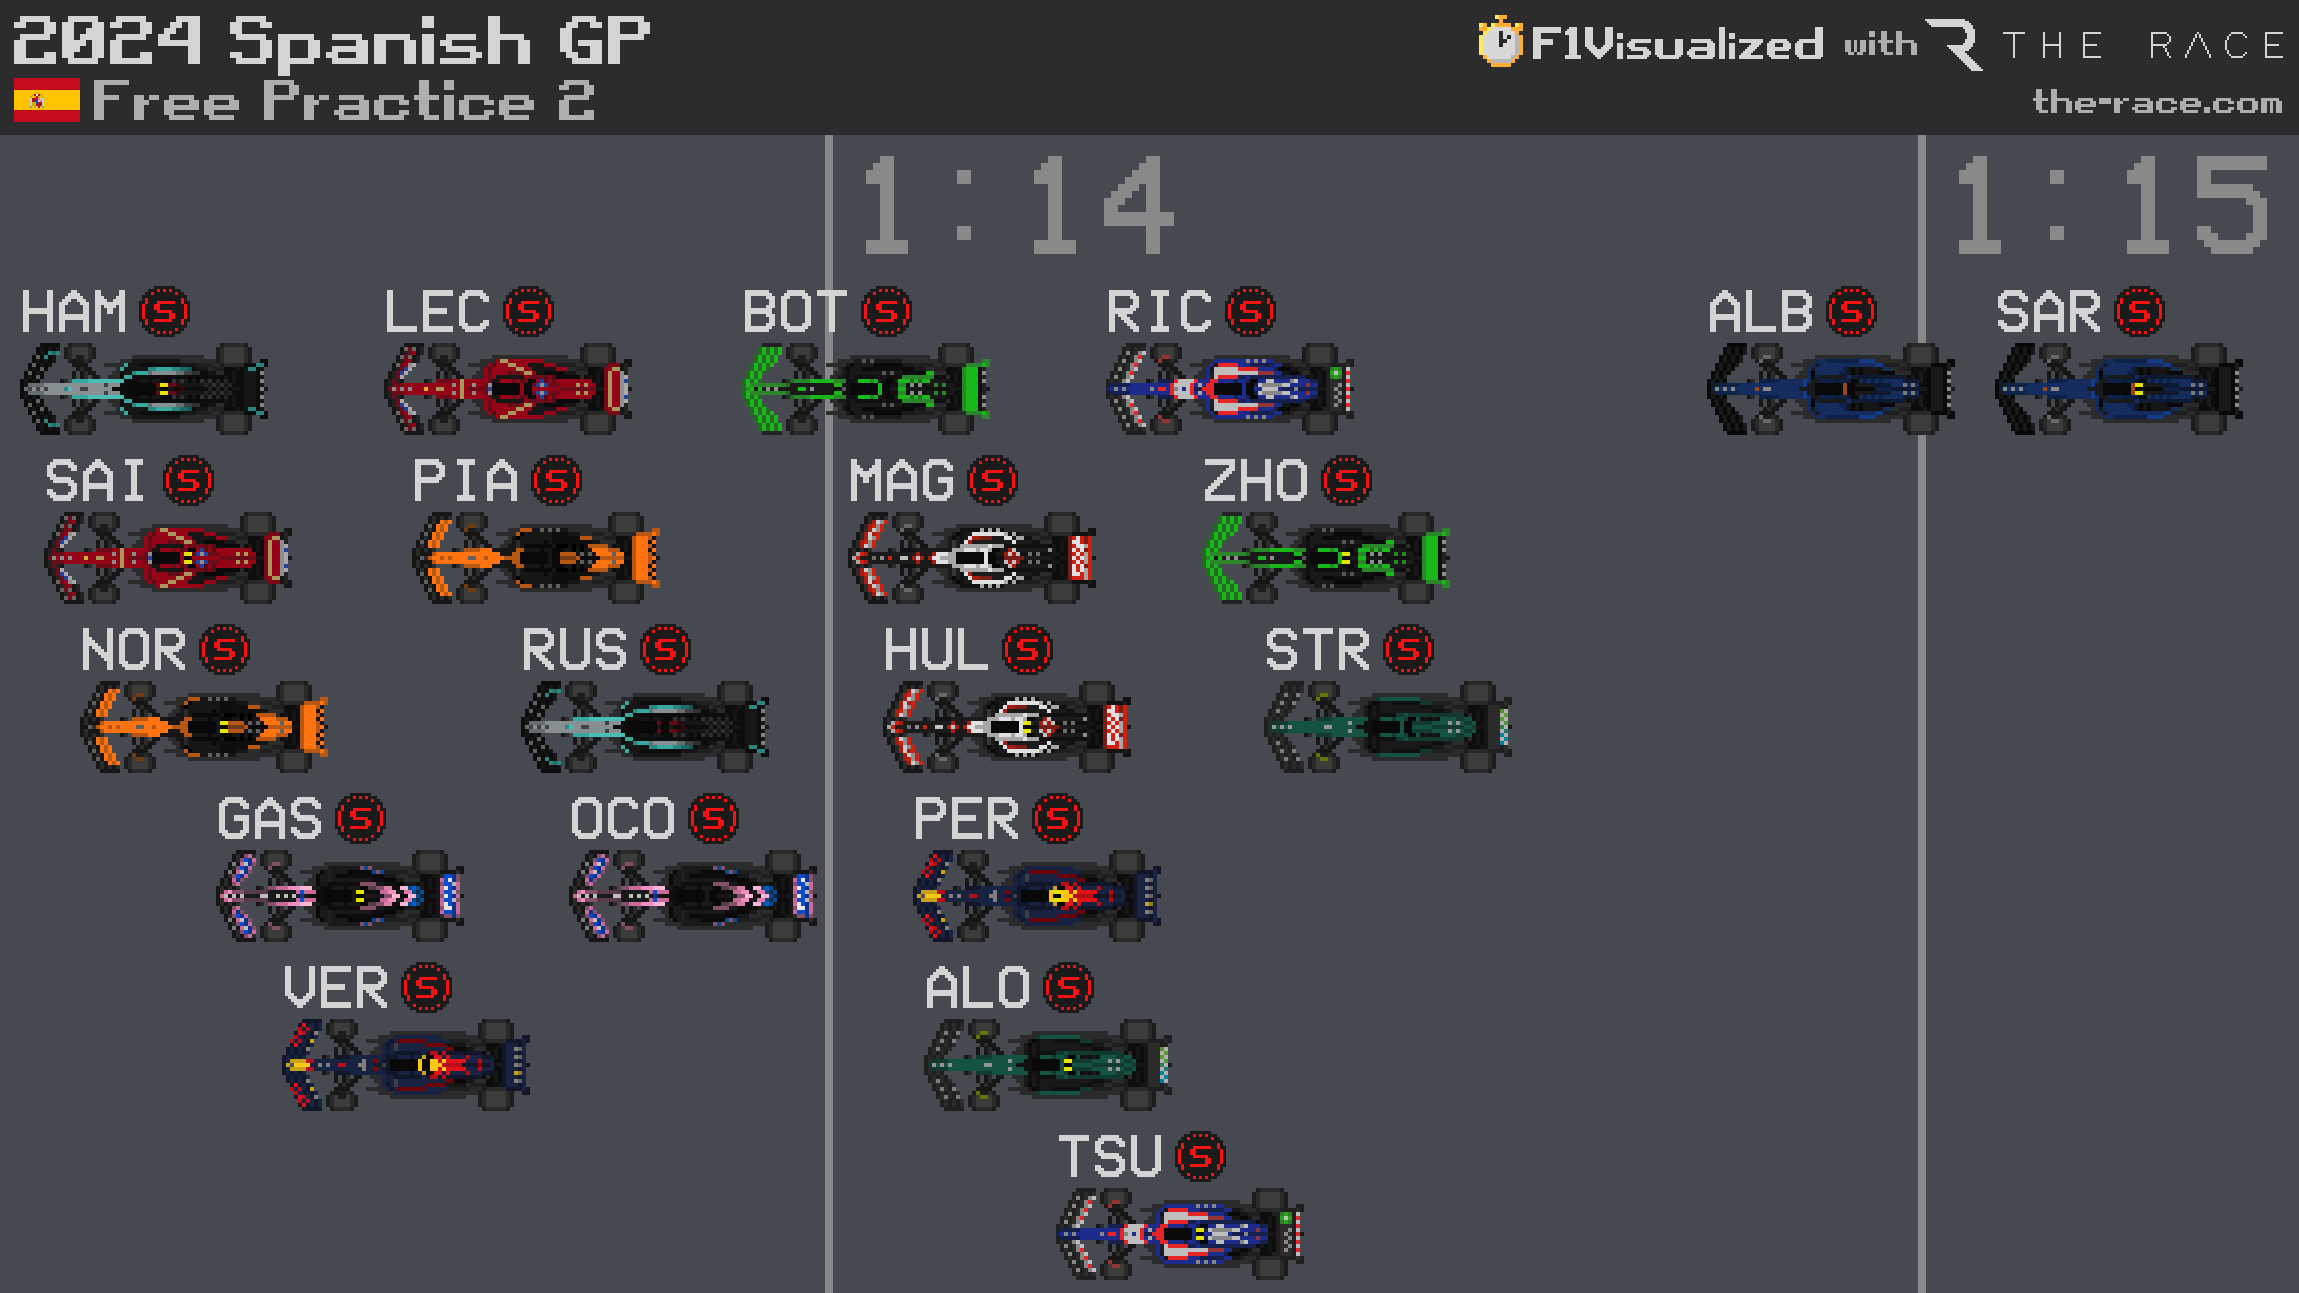 Spanish GP FP2 results